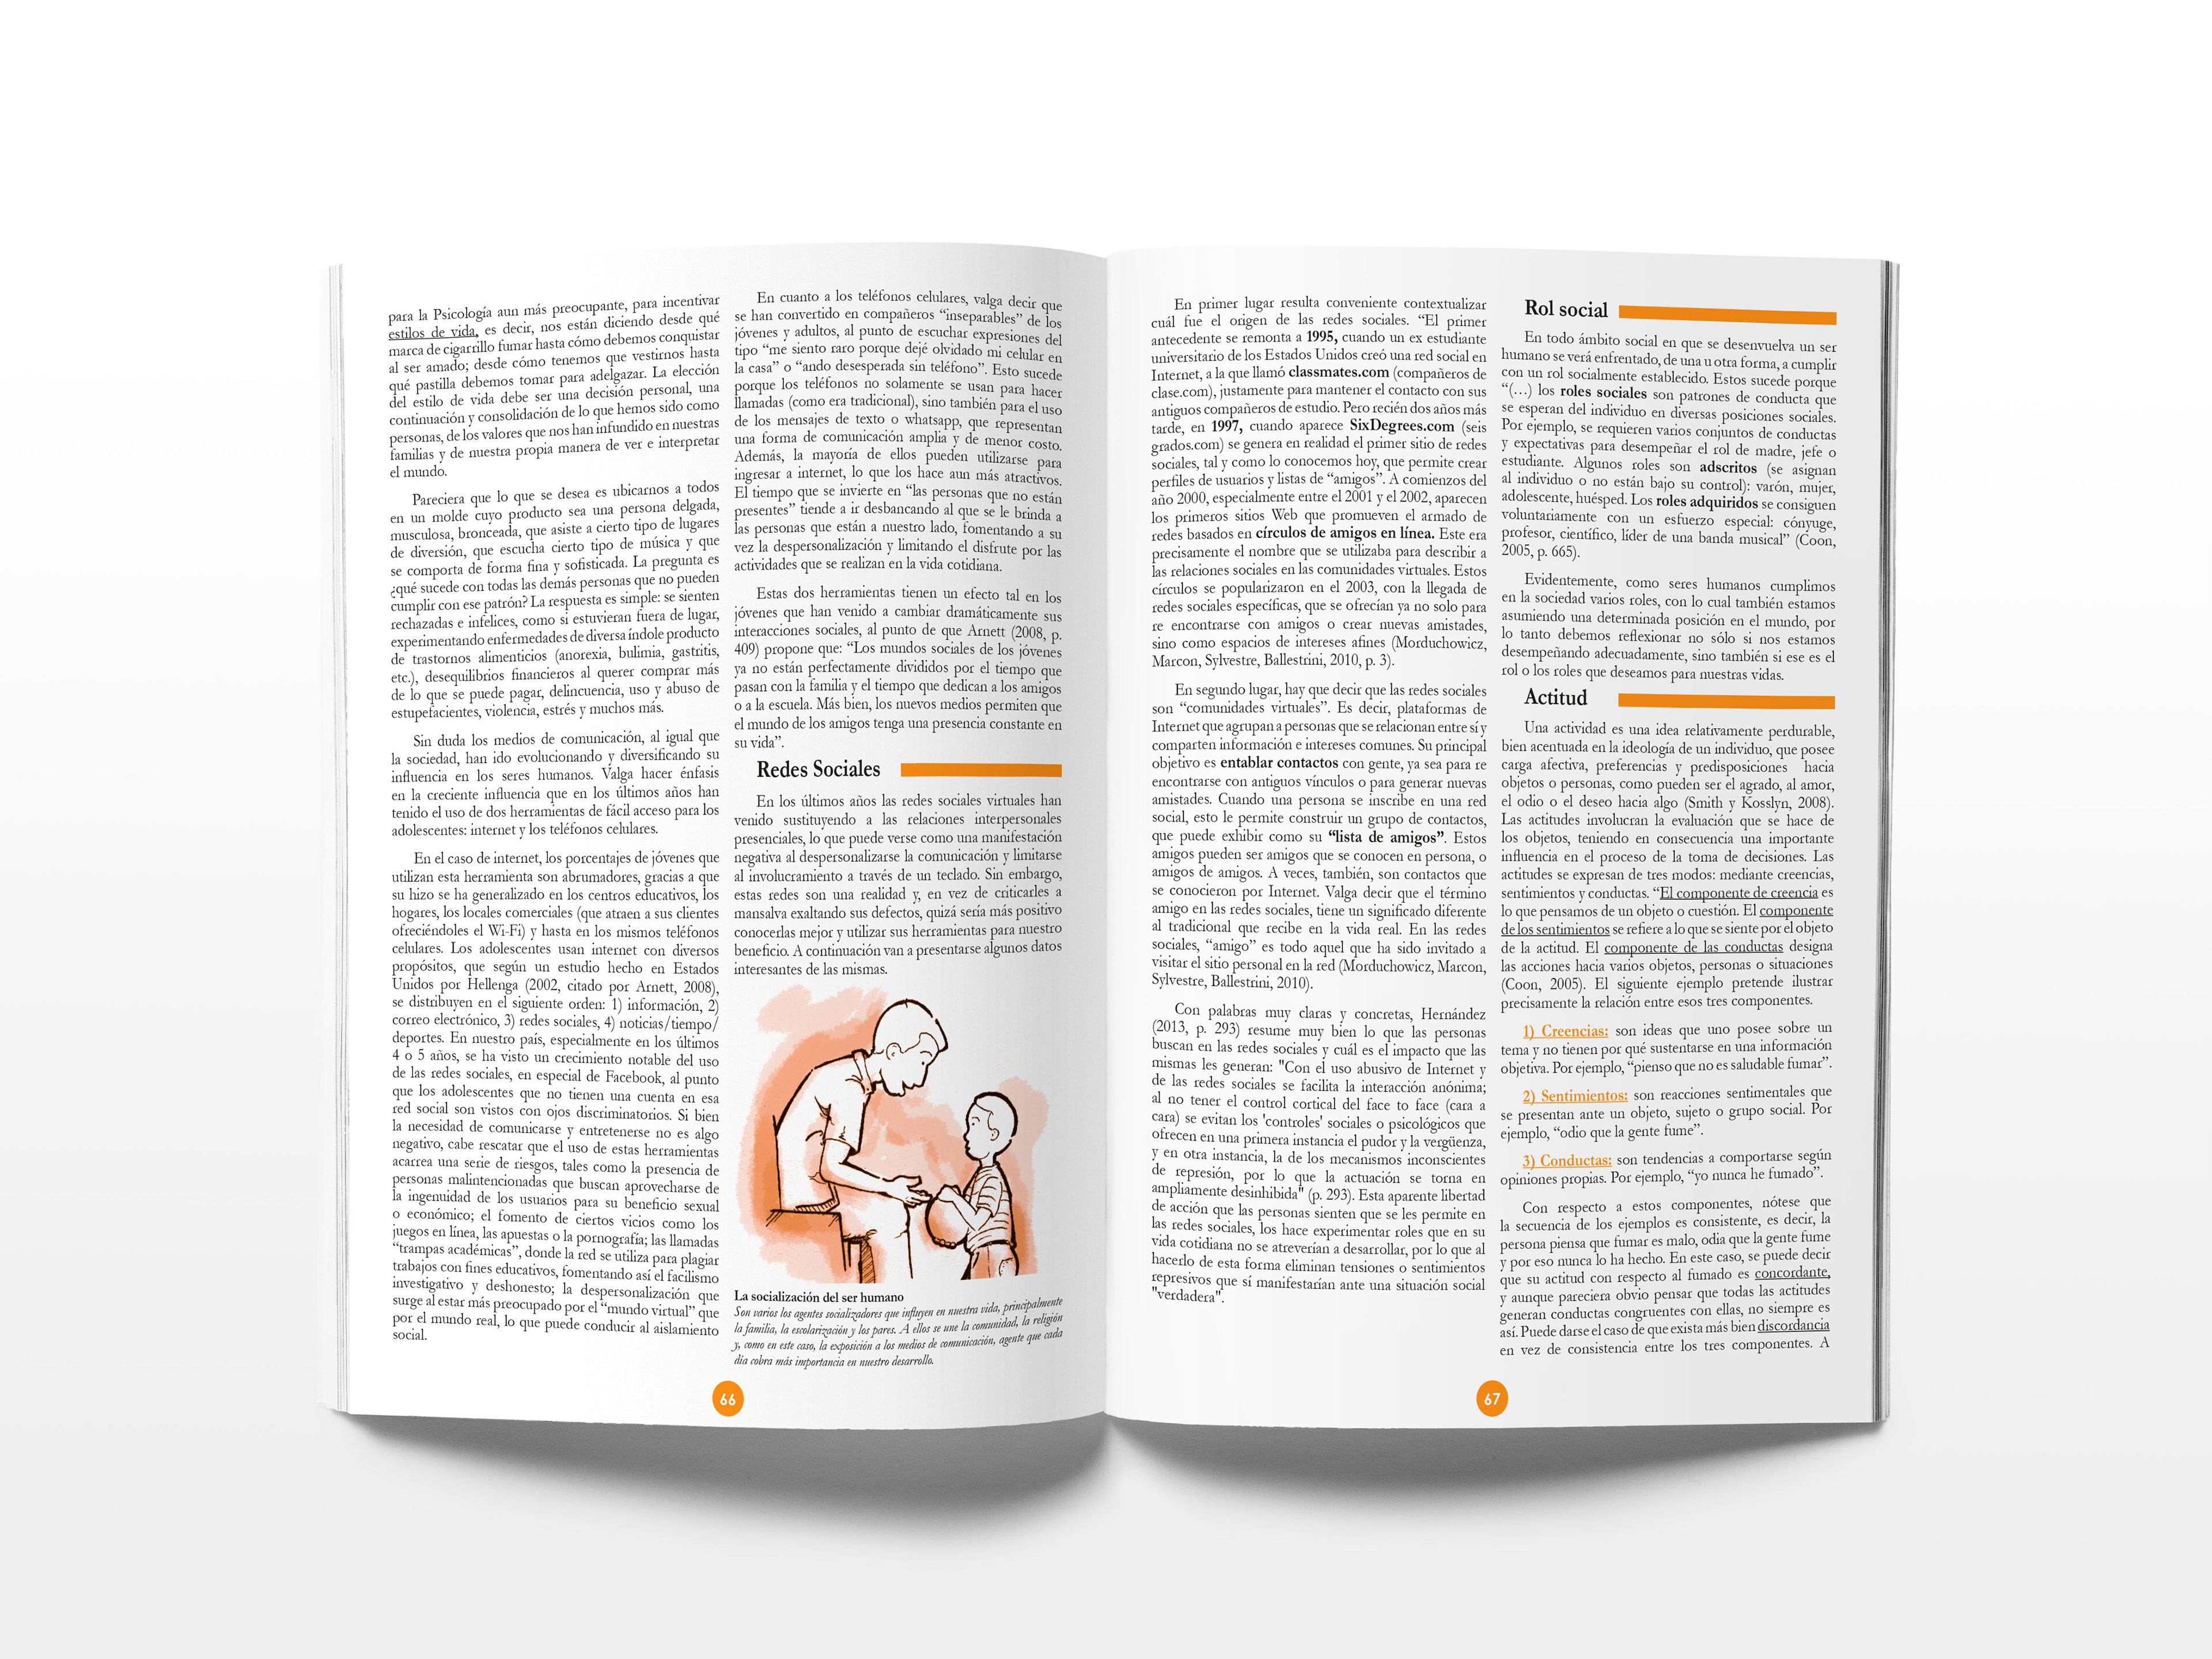 Rick Santamaria - Visual Designer - TextBook Layout Design